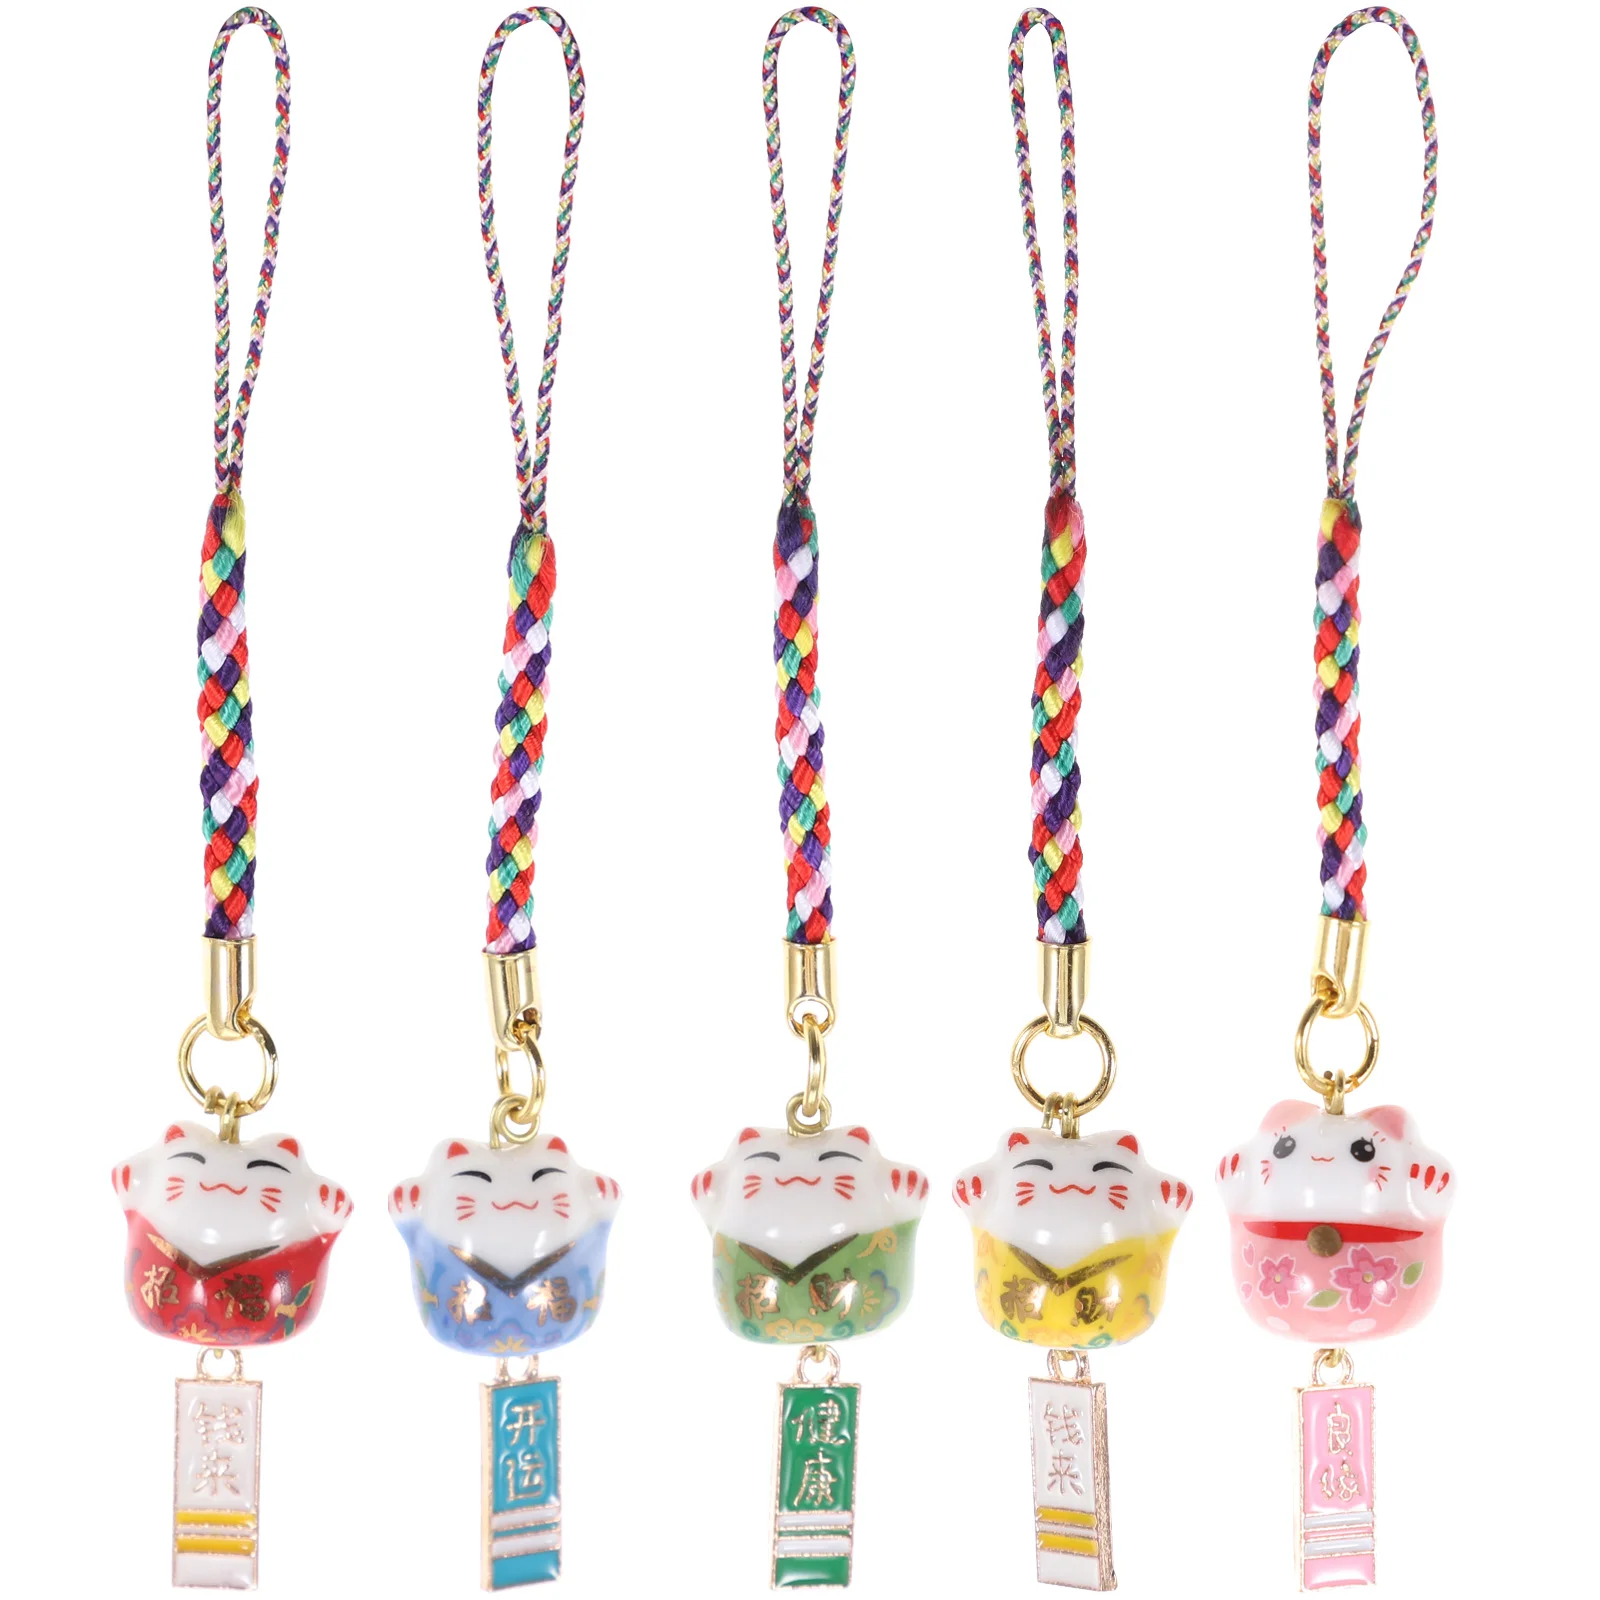 

Kitten Gifts Lucky Cat Keychains Pendant Japanese Maneki Neko Fortune Pendants Ceramic Beckoning Cat Phone Charm